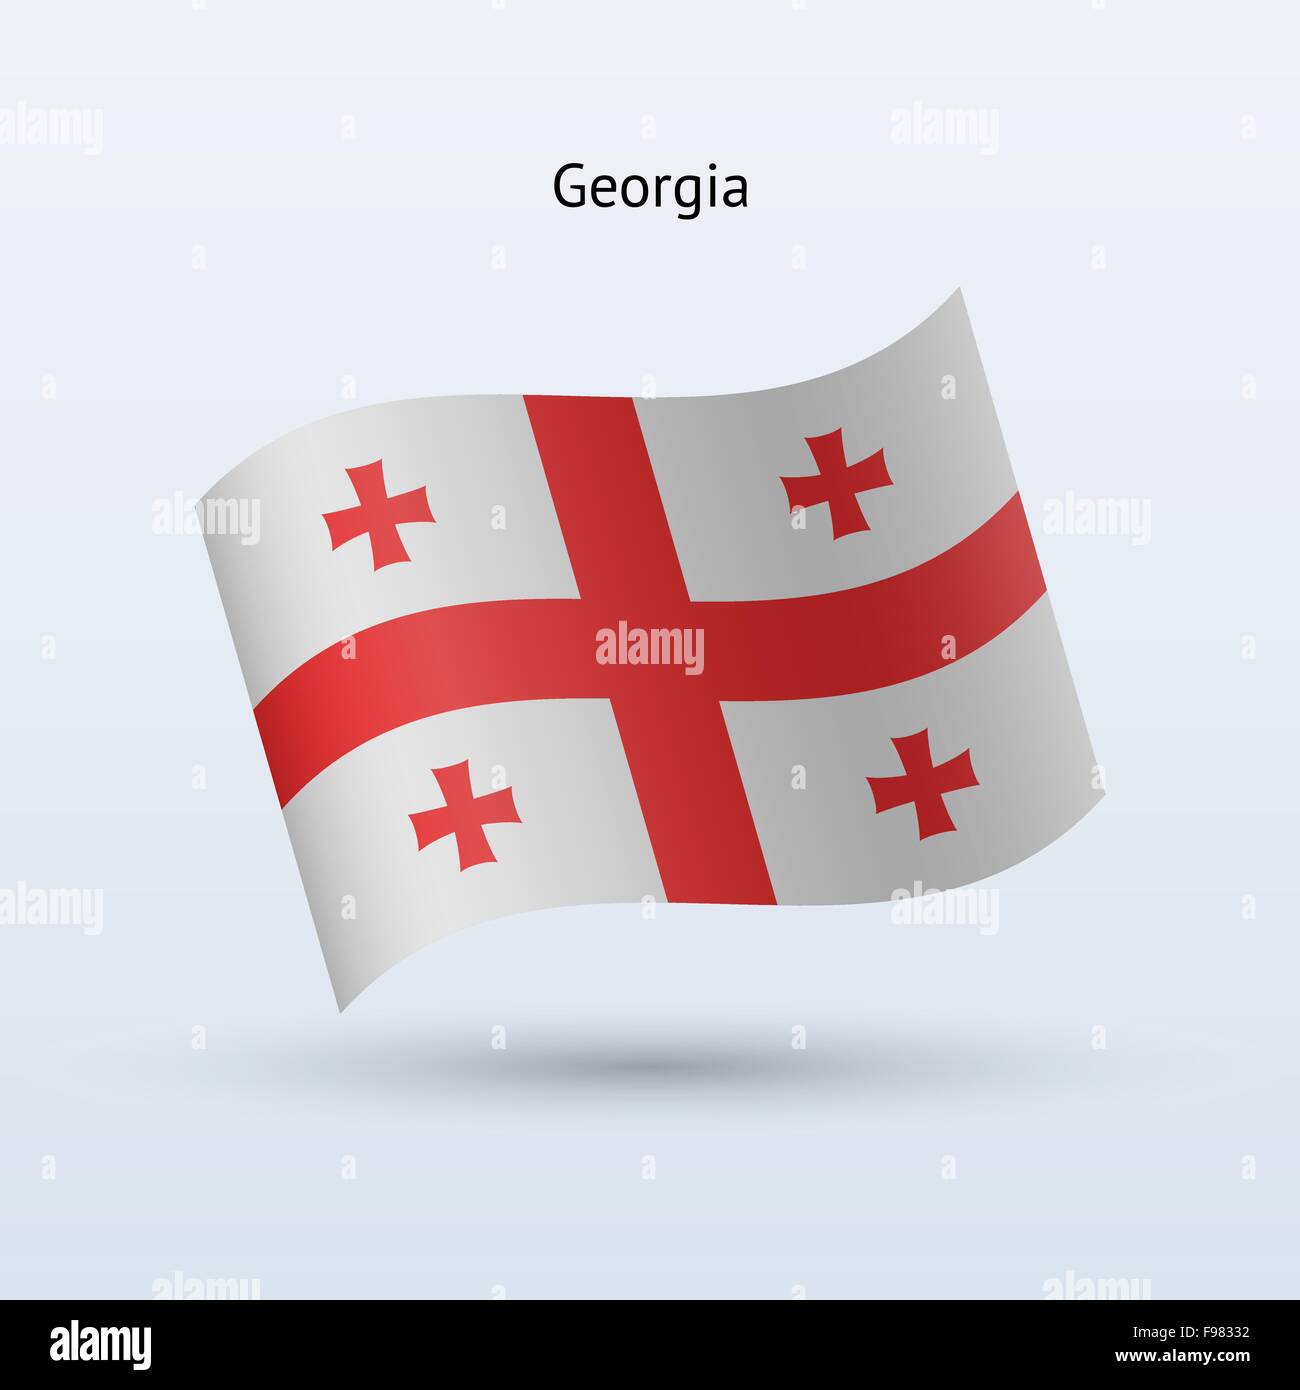 Georgia flag waving form. Vector illustration. Stock Vector